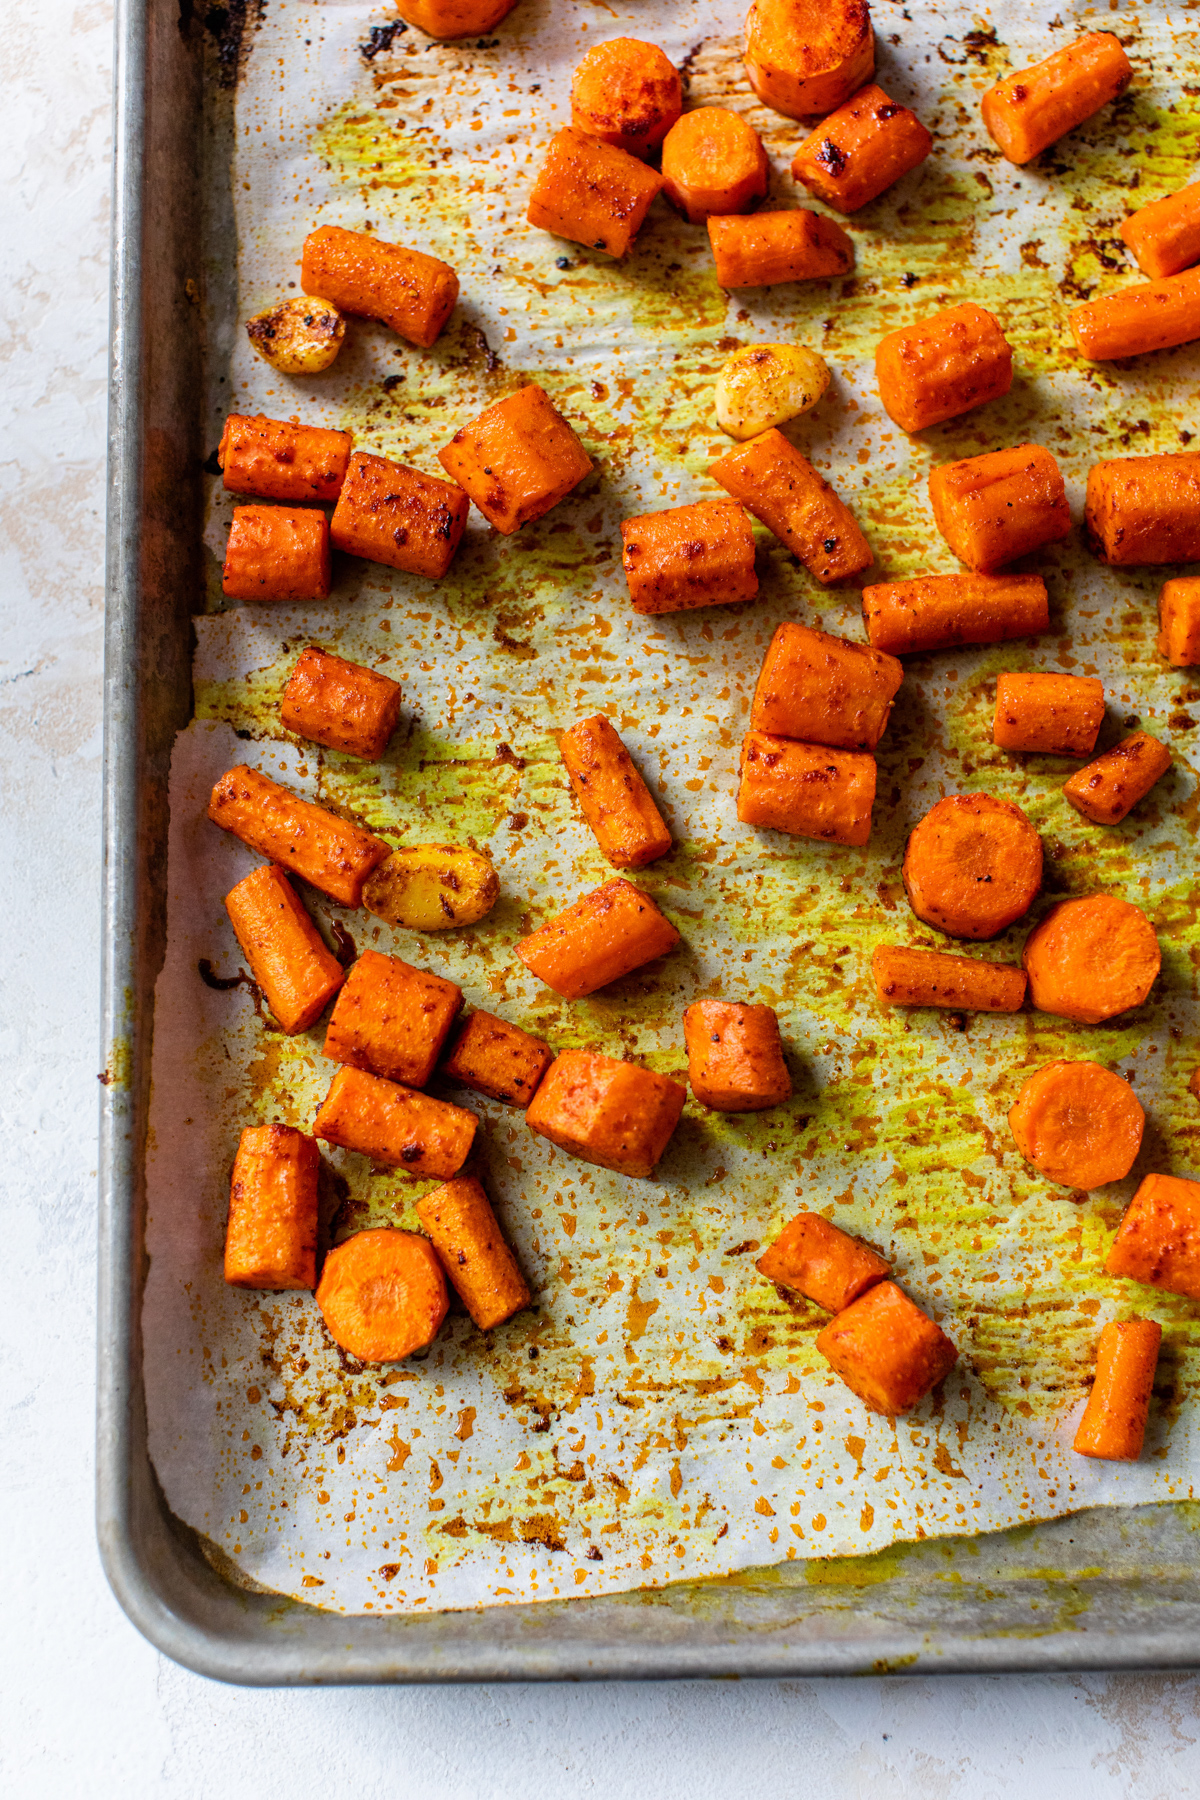 seasoned carrots and garlic on a roasting pan